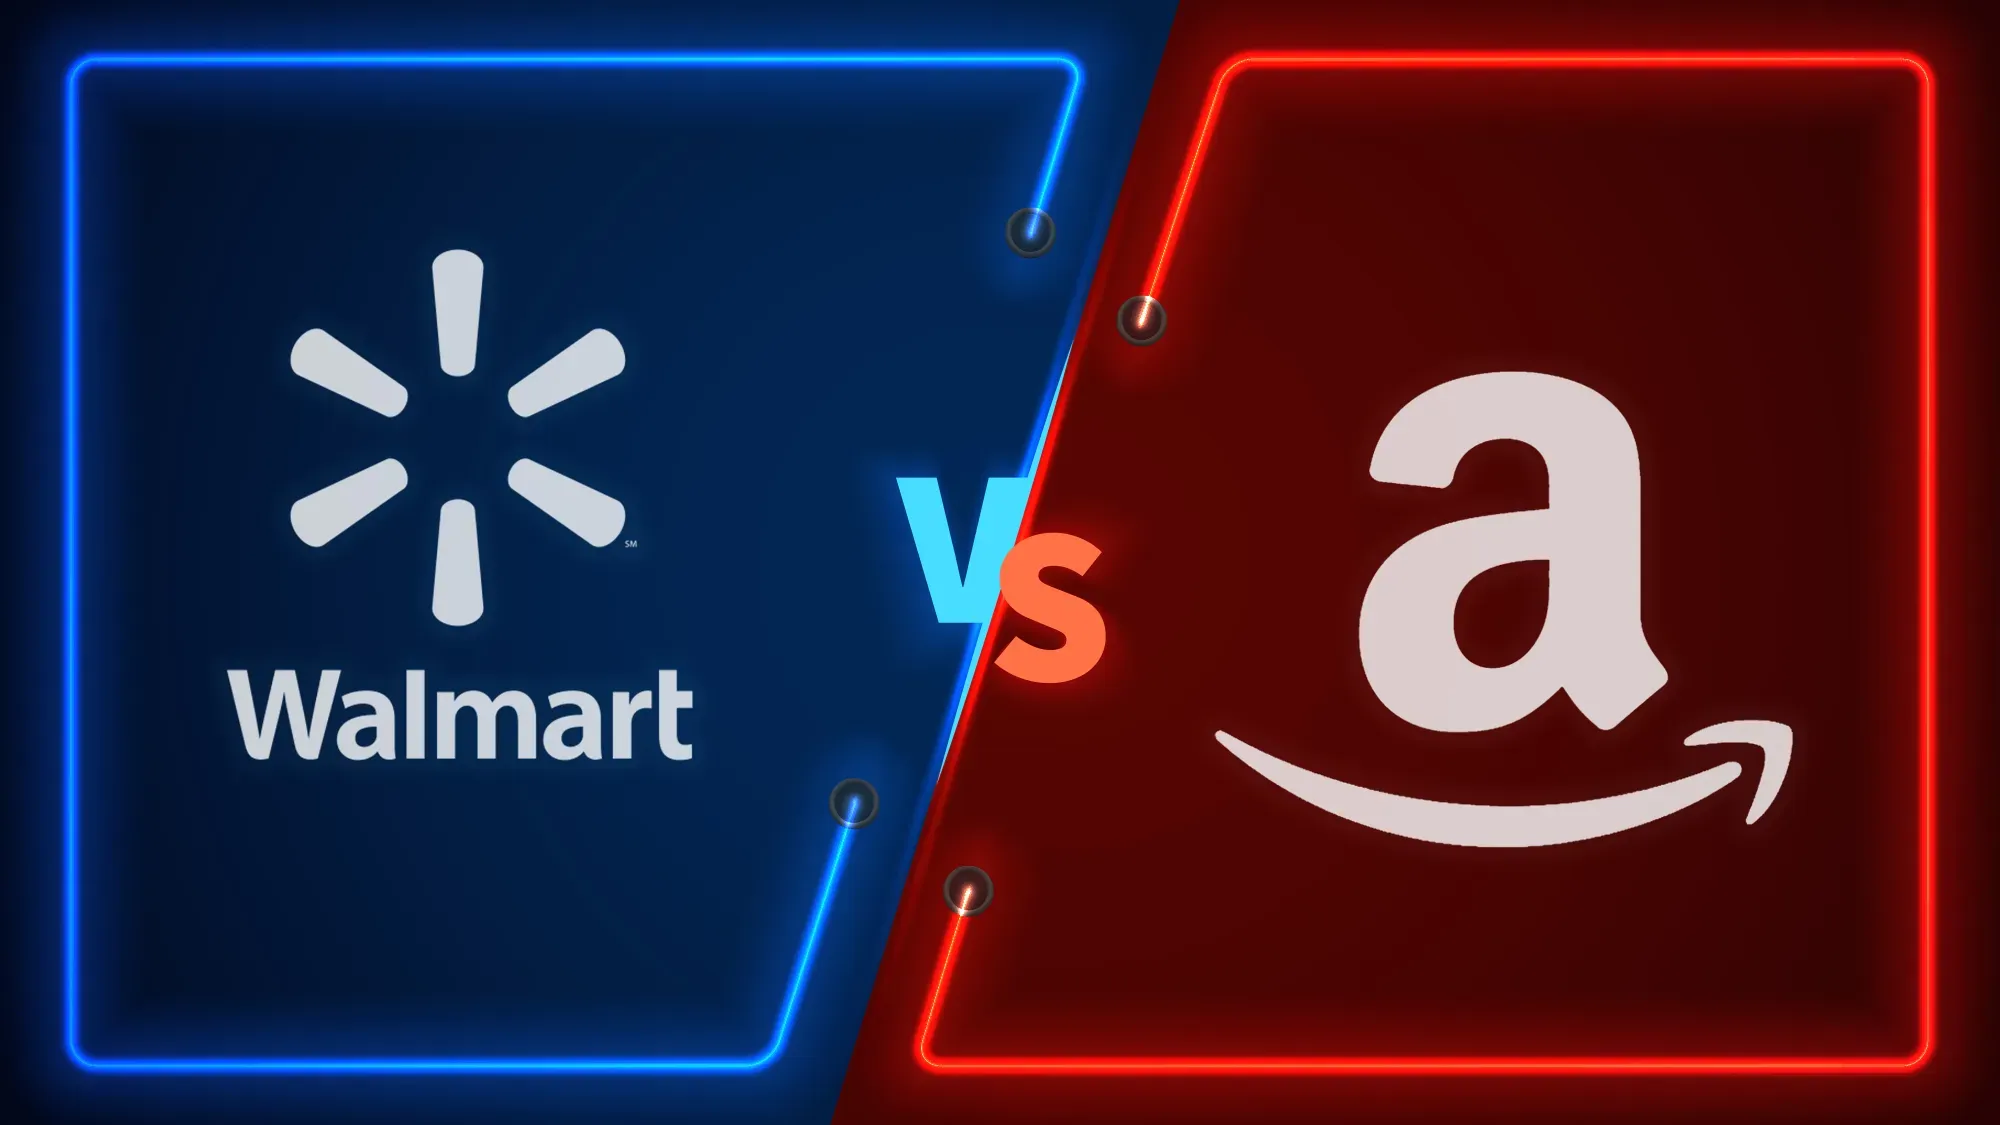 Walmart Takes On Amazon in Adtech